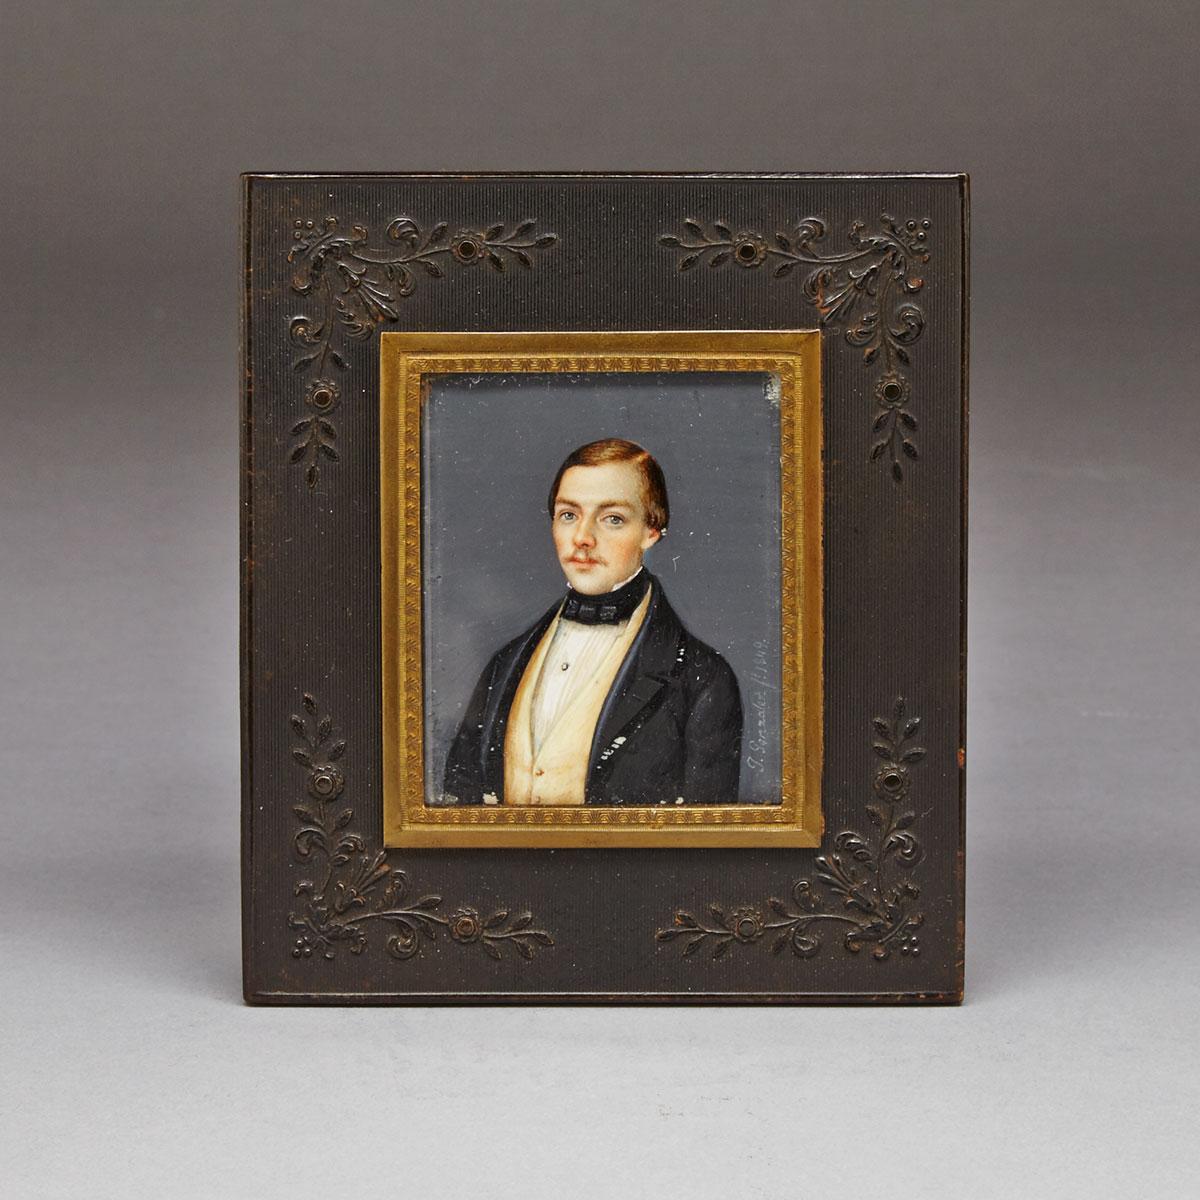 Portrait Miniature of a Young Gentleman, J. Gonzales, 1849